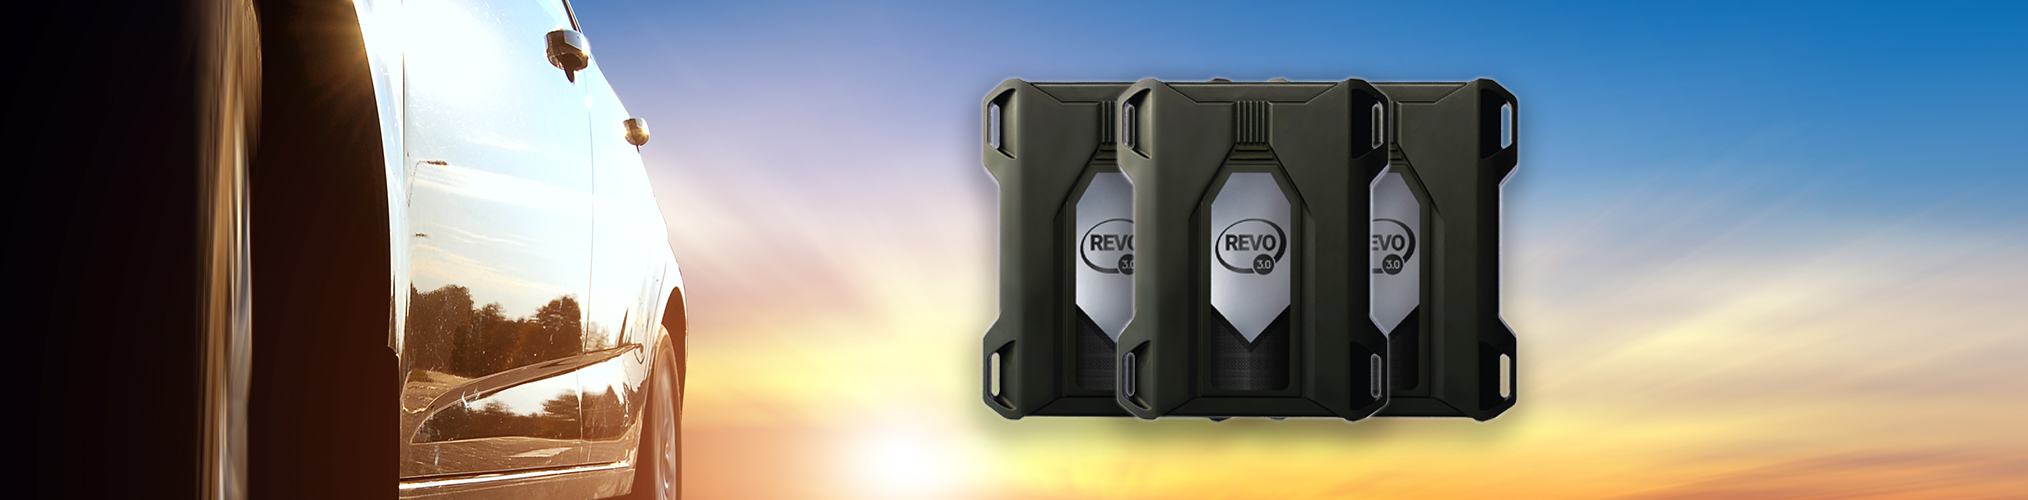 Revo Wireless Portfolio - Hardware - Advantage GPS